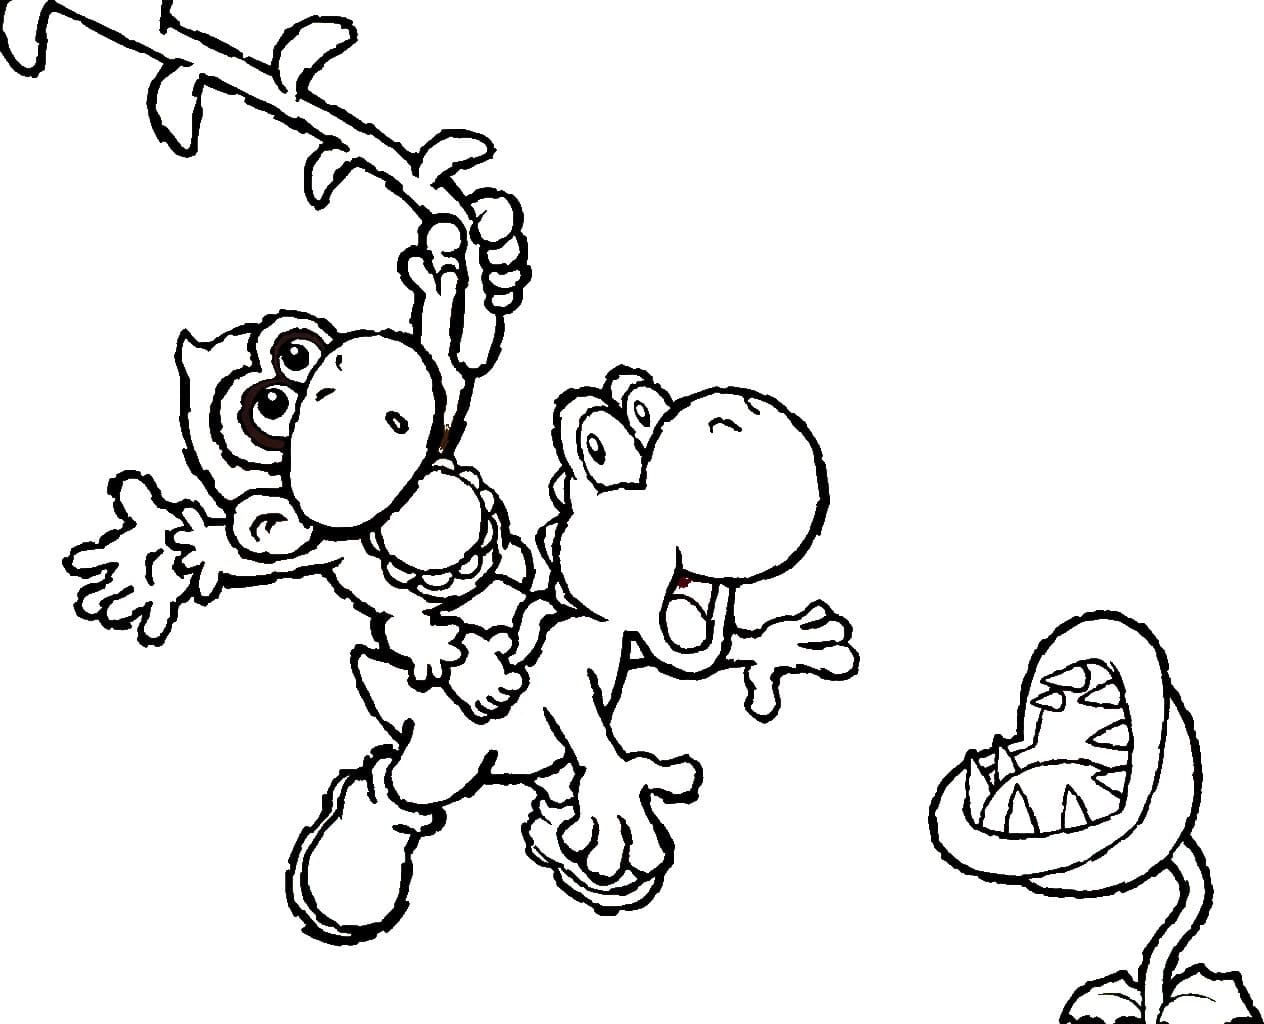 Yoshi Coloring Pages. Print Dinosaur from Mario   WONDER DAY ...